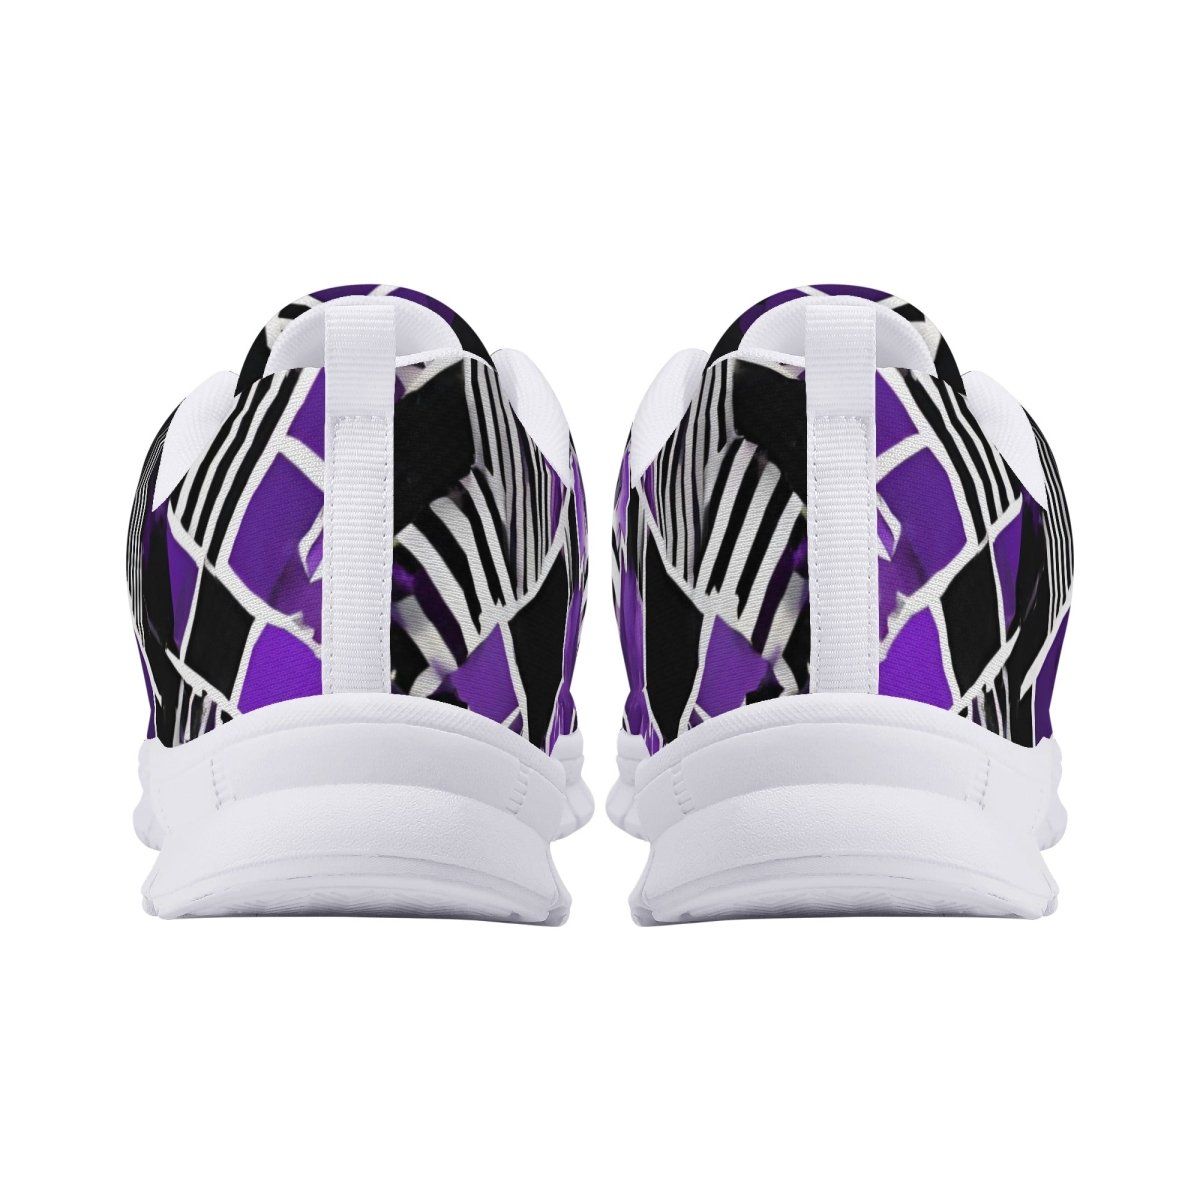 Purple and Black Men's Running Shoes - Iron Phoenix GHG